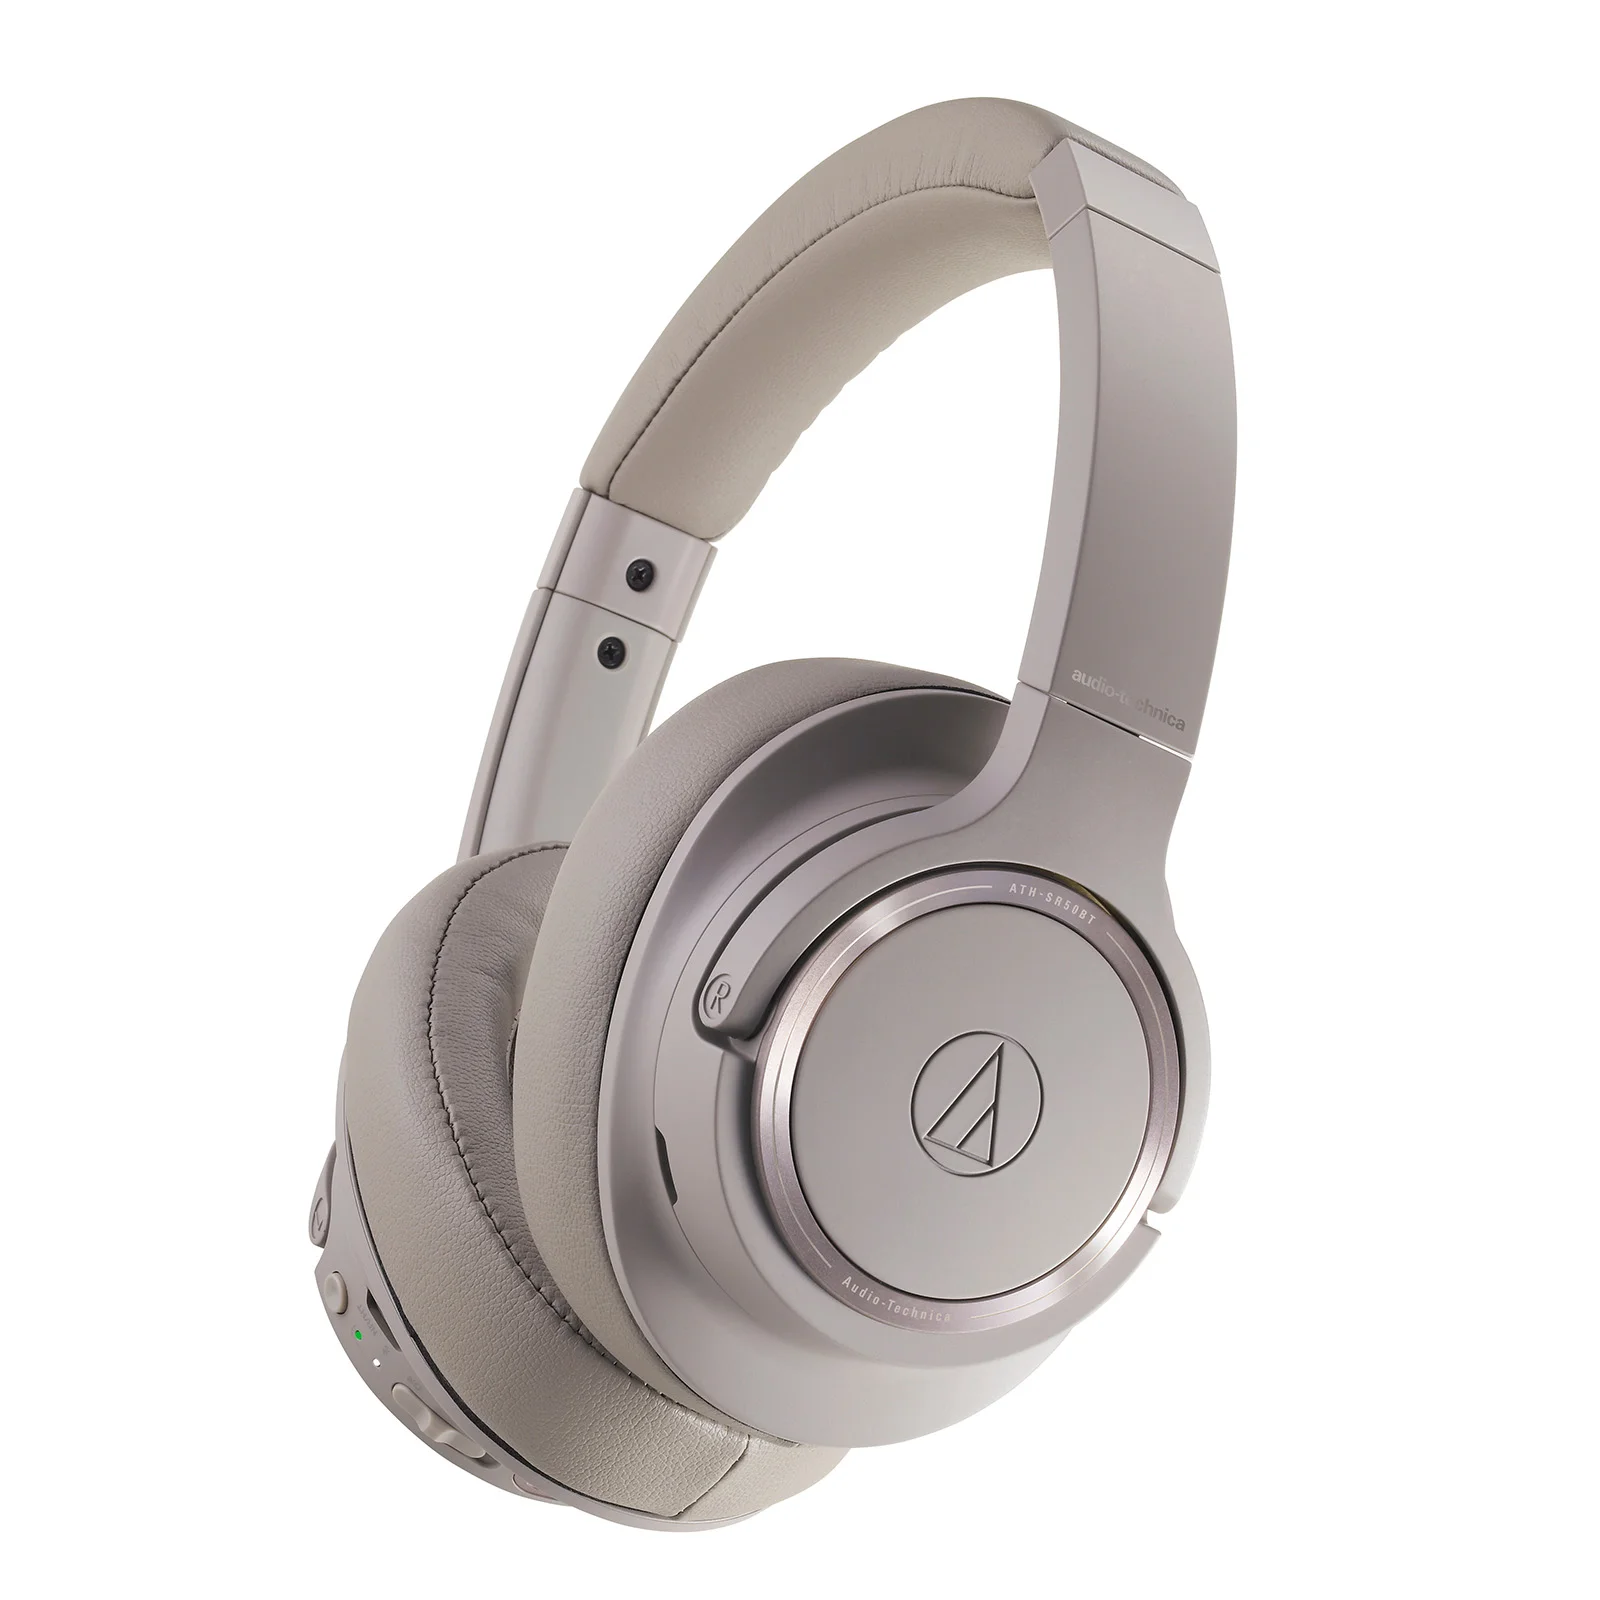 Audio Technica ATH-SR50BTBW Wireless Bluetooth Headphones - Brown/Grey Image 1